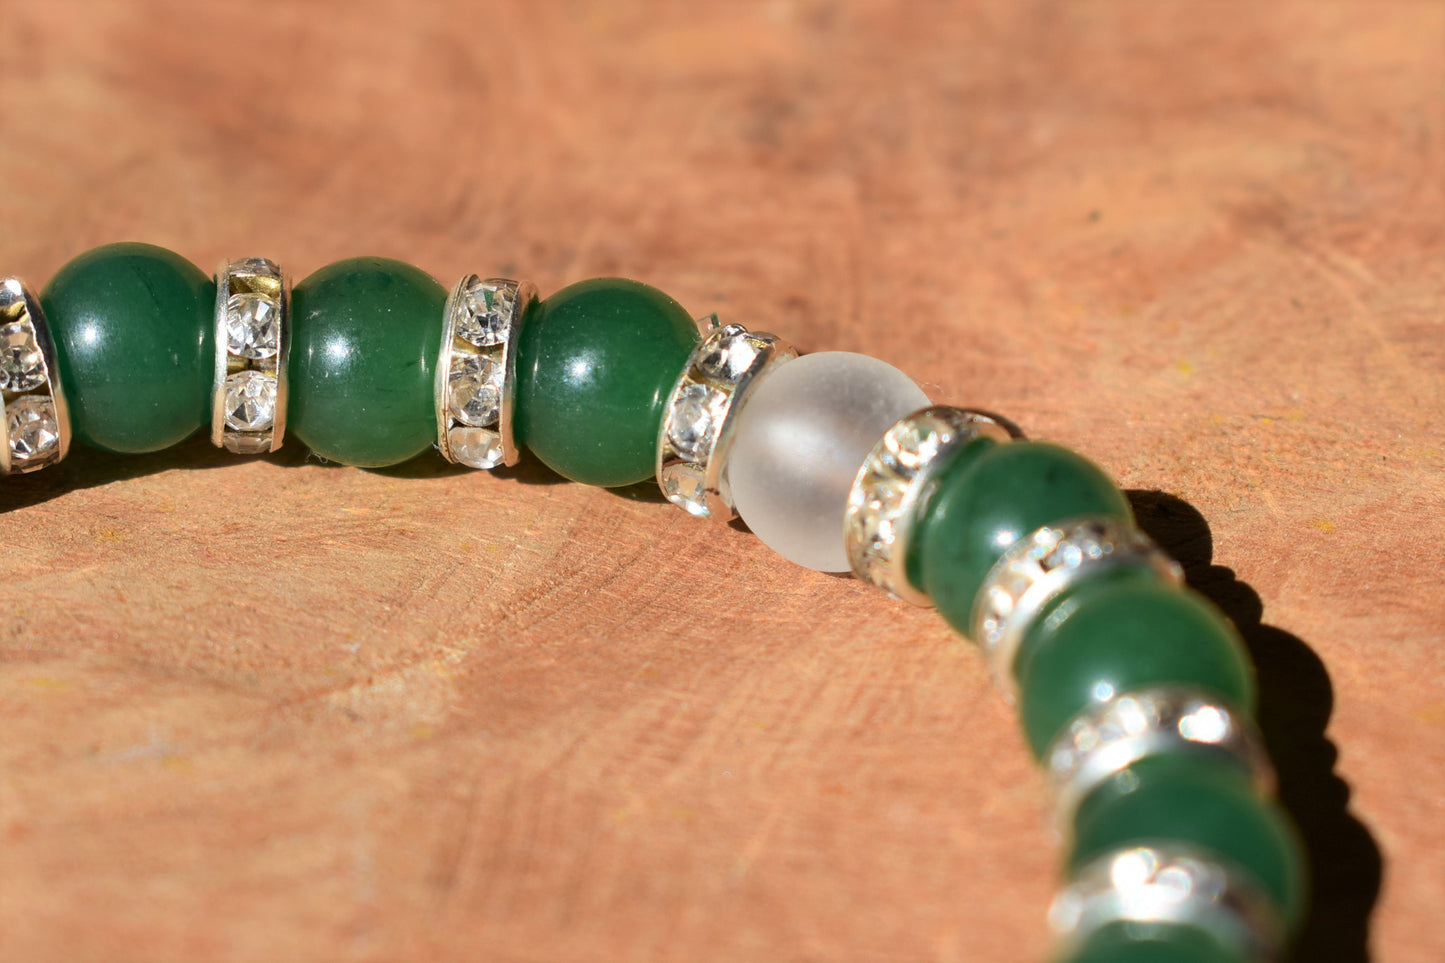 Green Aventurine & Quartz Crystal Bracelet